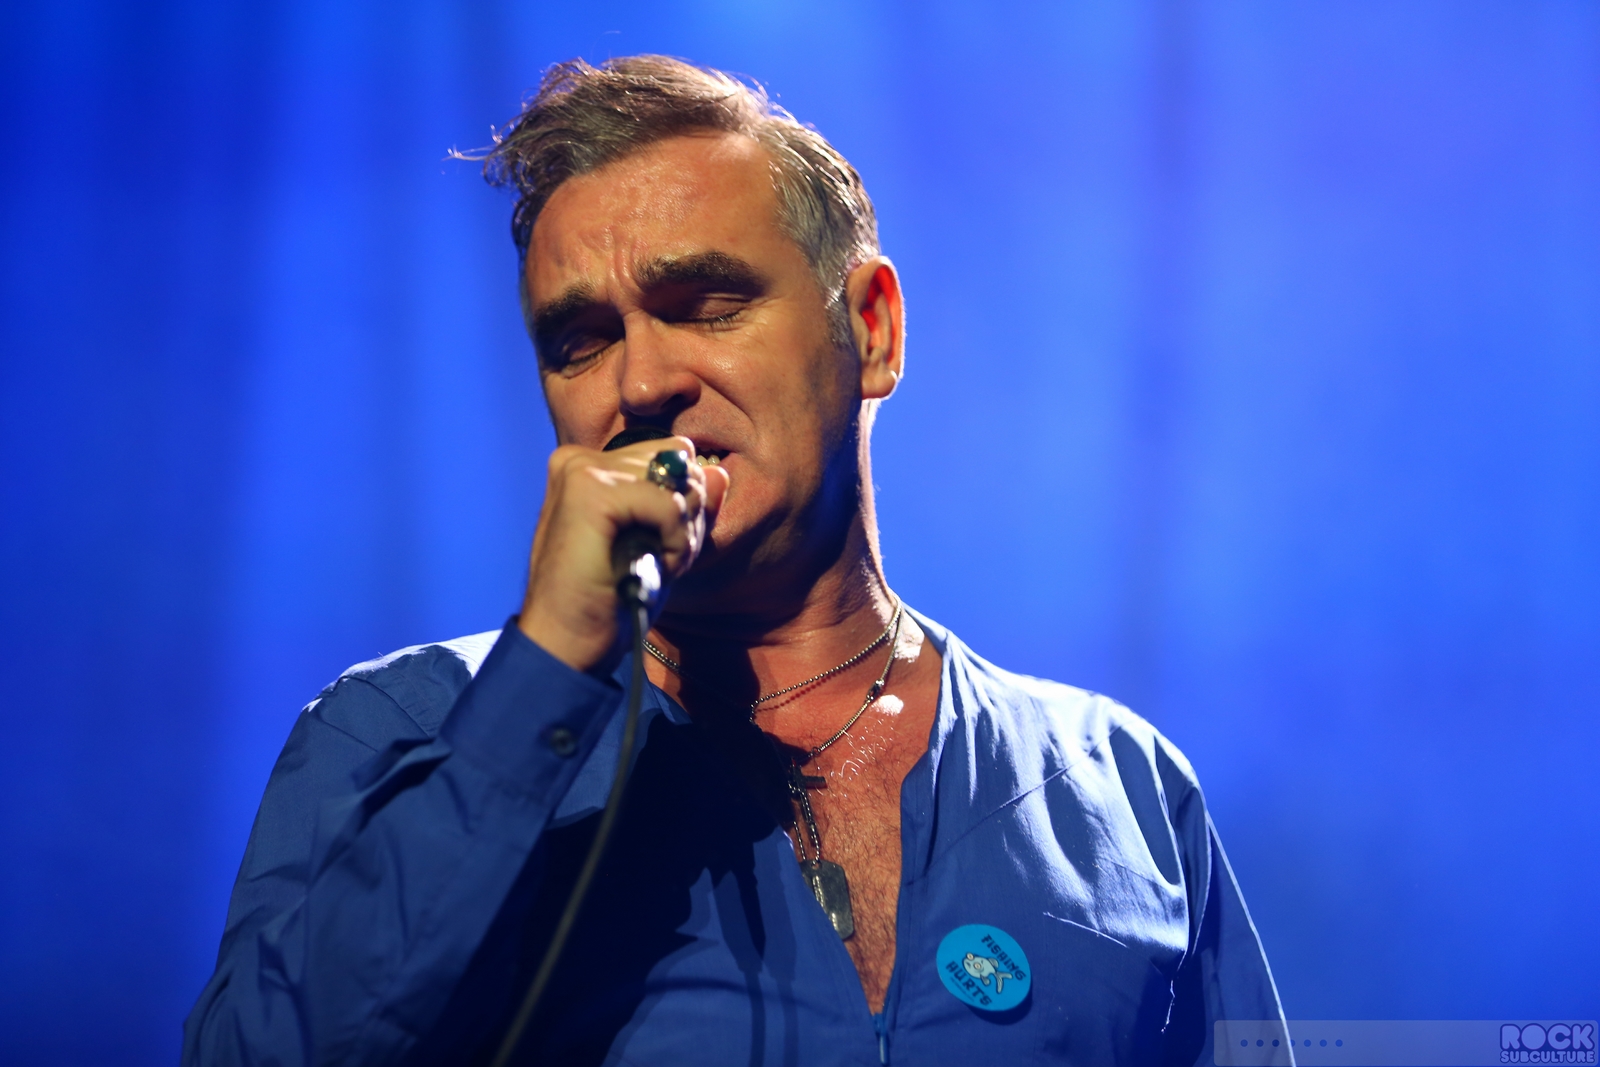 Morrissey-2013-Concert-Review-Mondavi-Center-Music-March-4-Set-List-The-Smiths-025.jpg